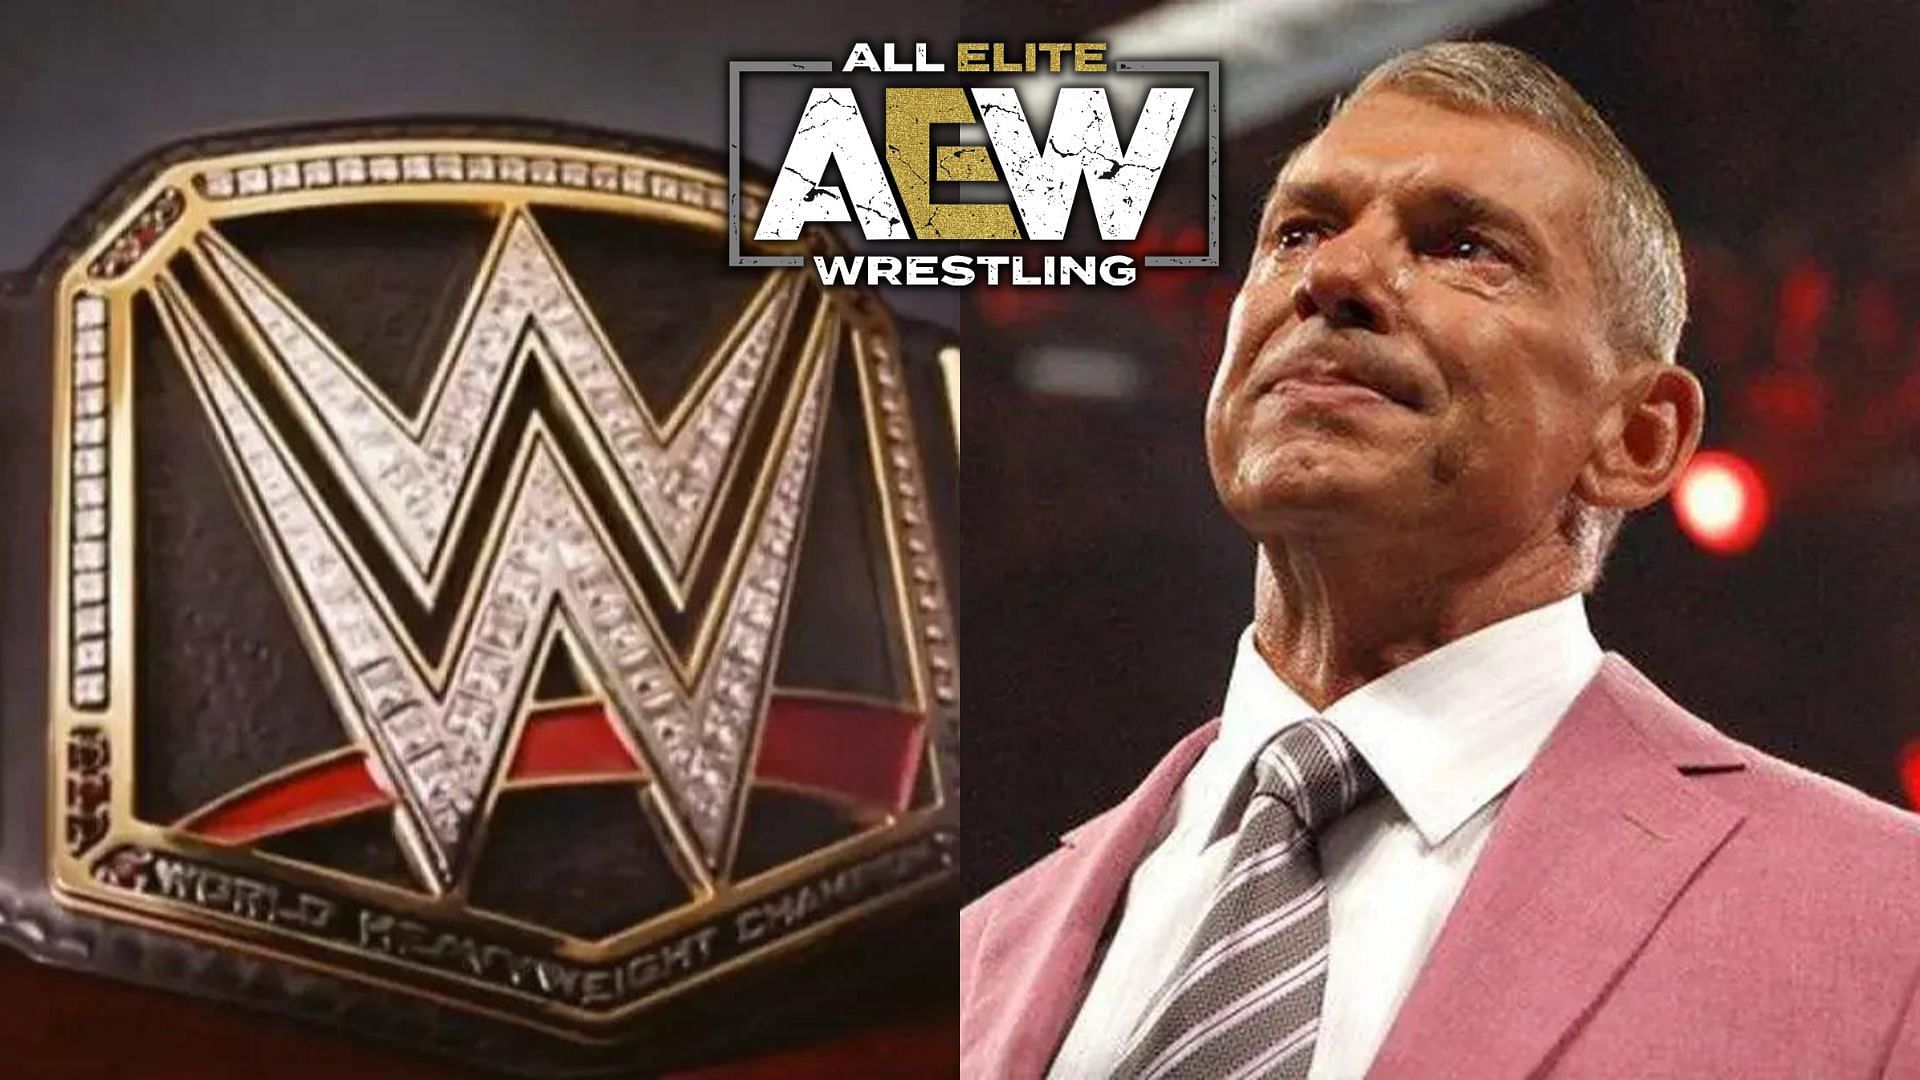 WWE Championship Belt (left), Vince McMahon (right)